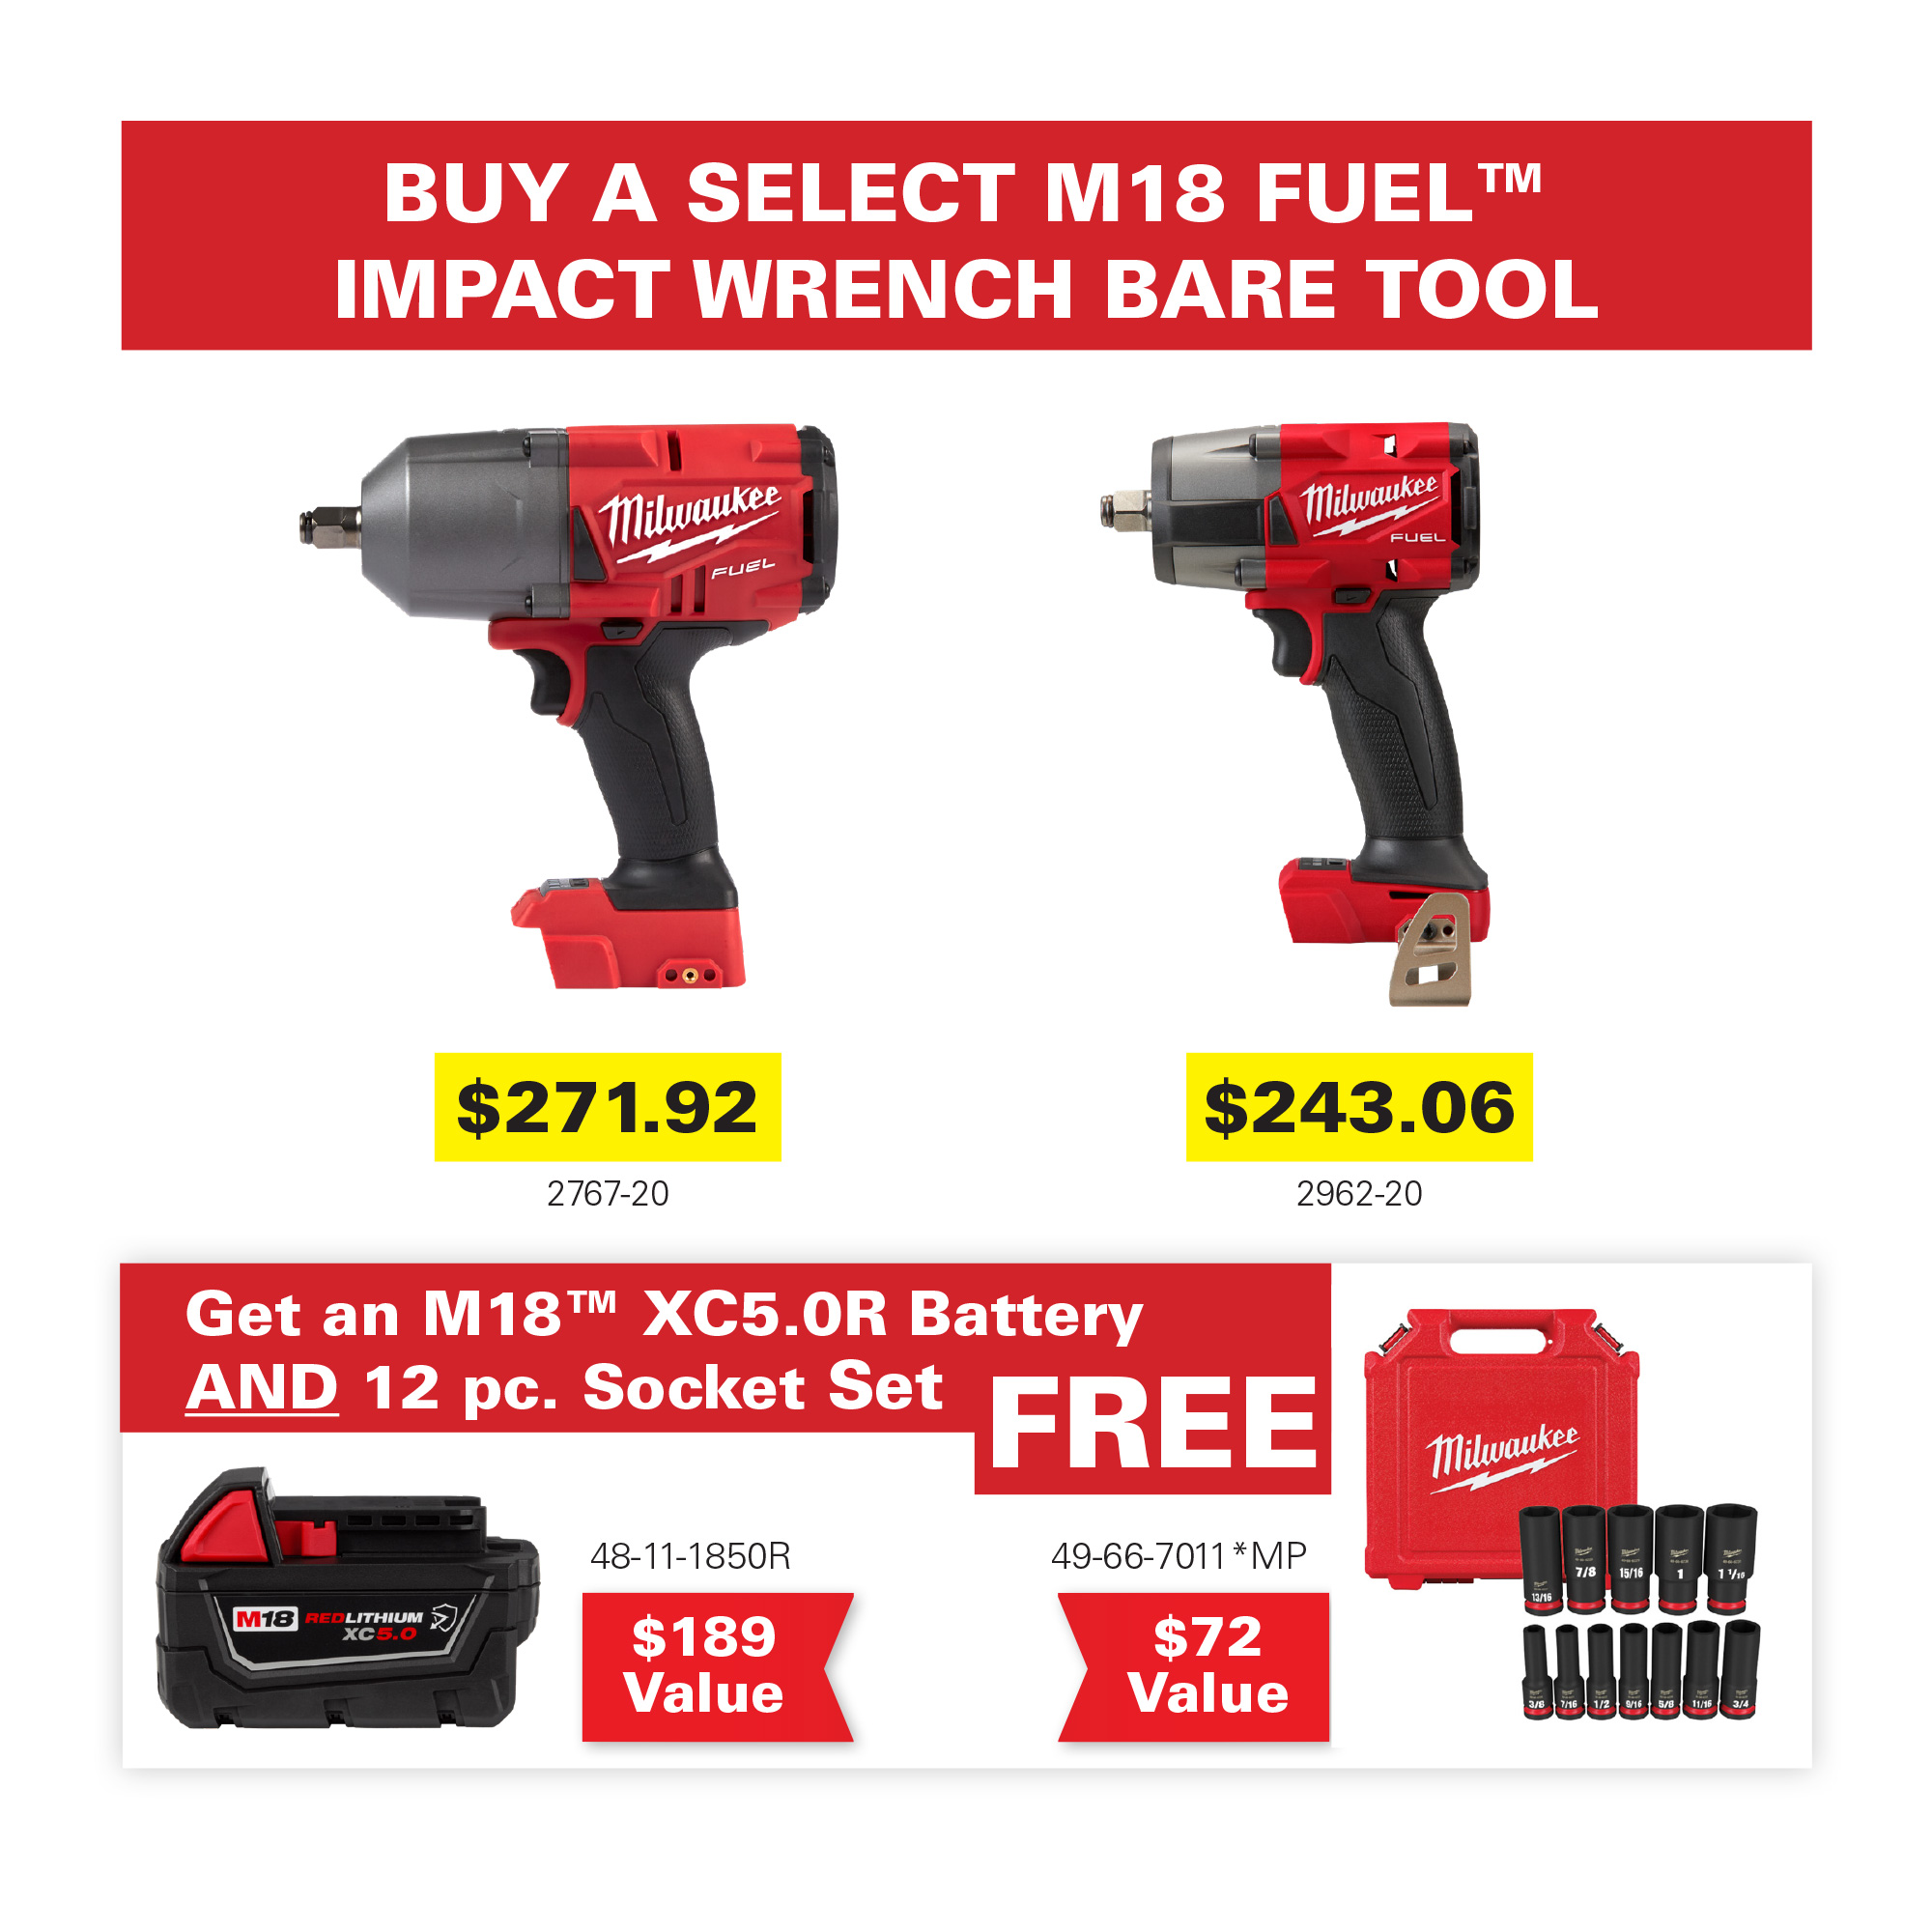 Milwaukee M18 Fuel Impact Wrench Bare Tool Promo